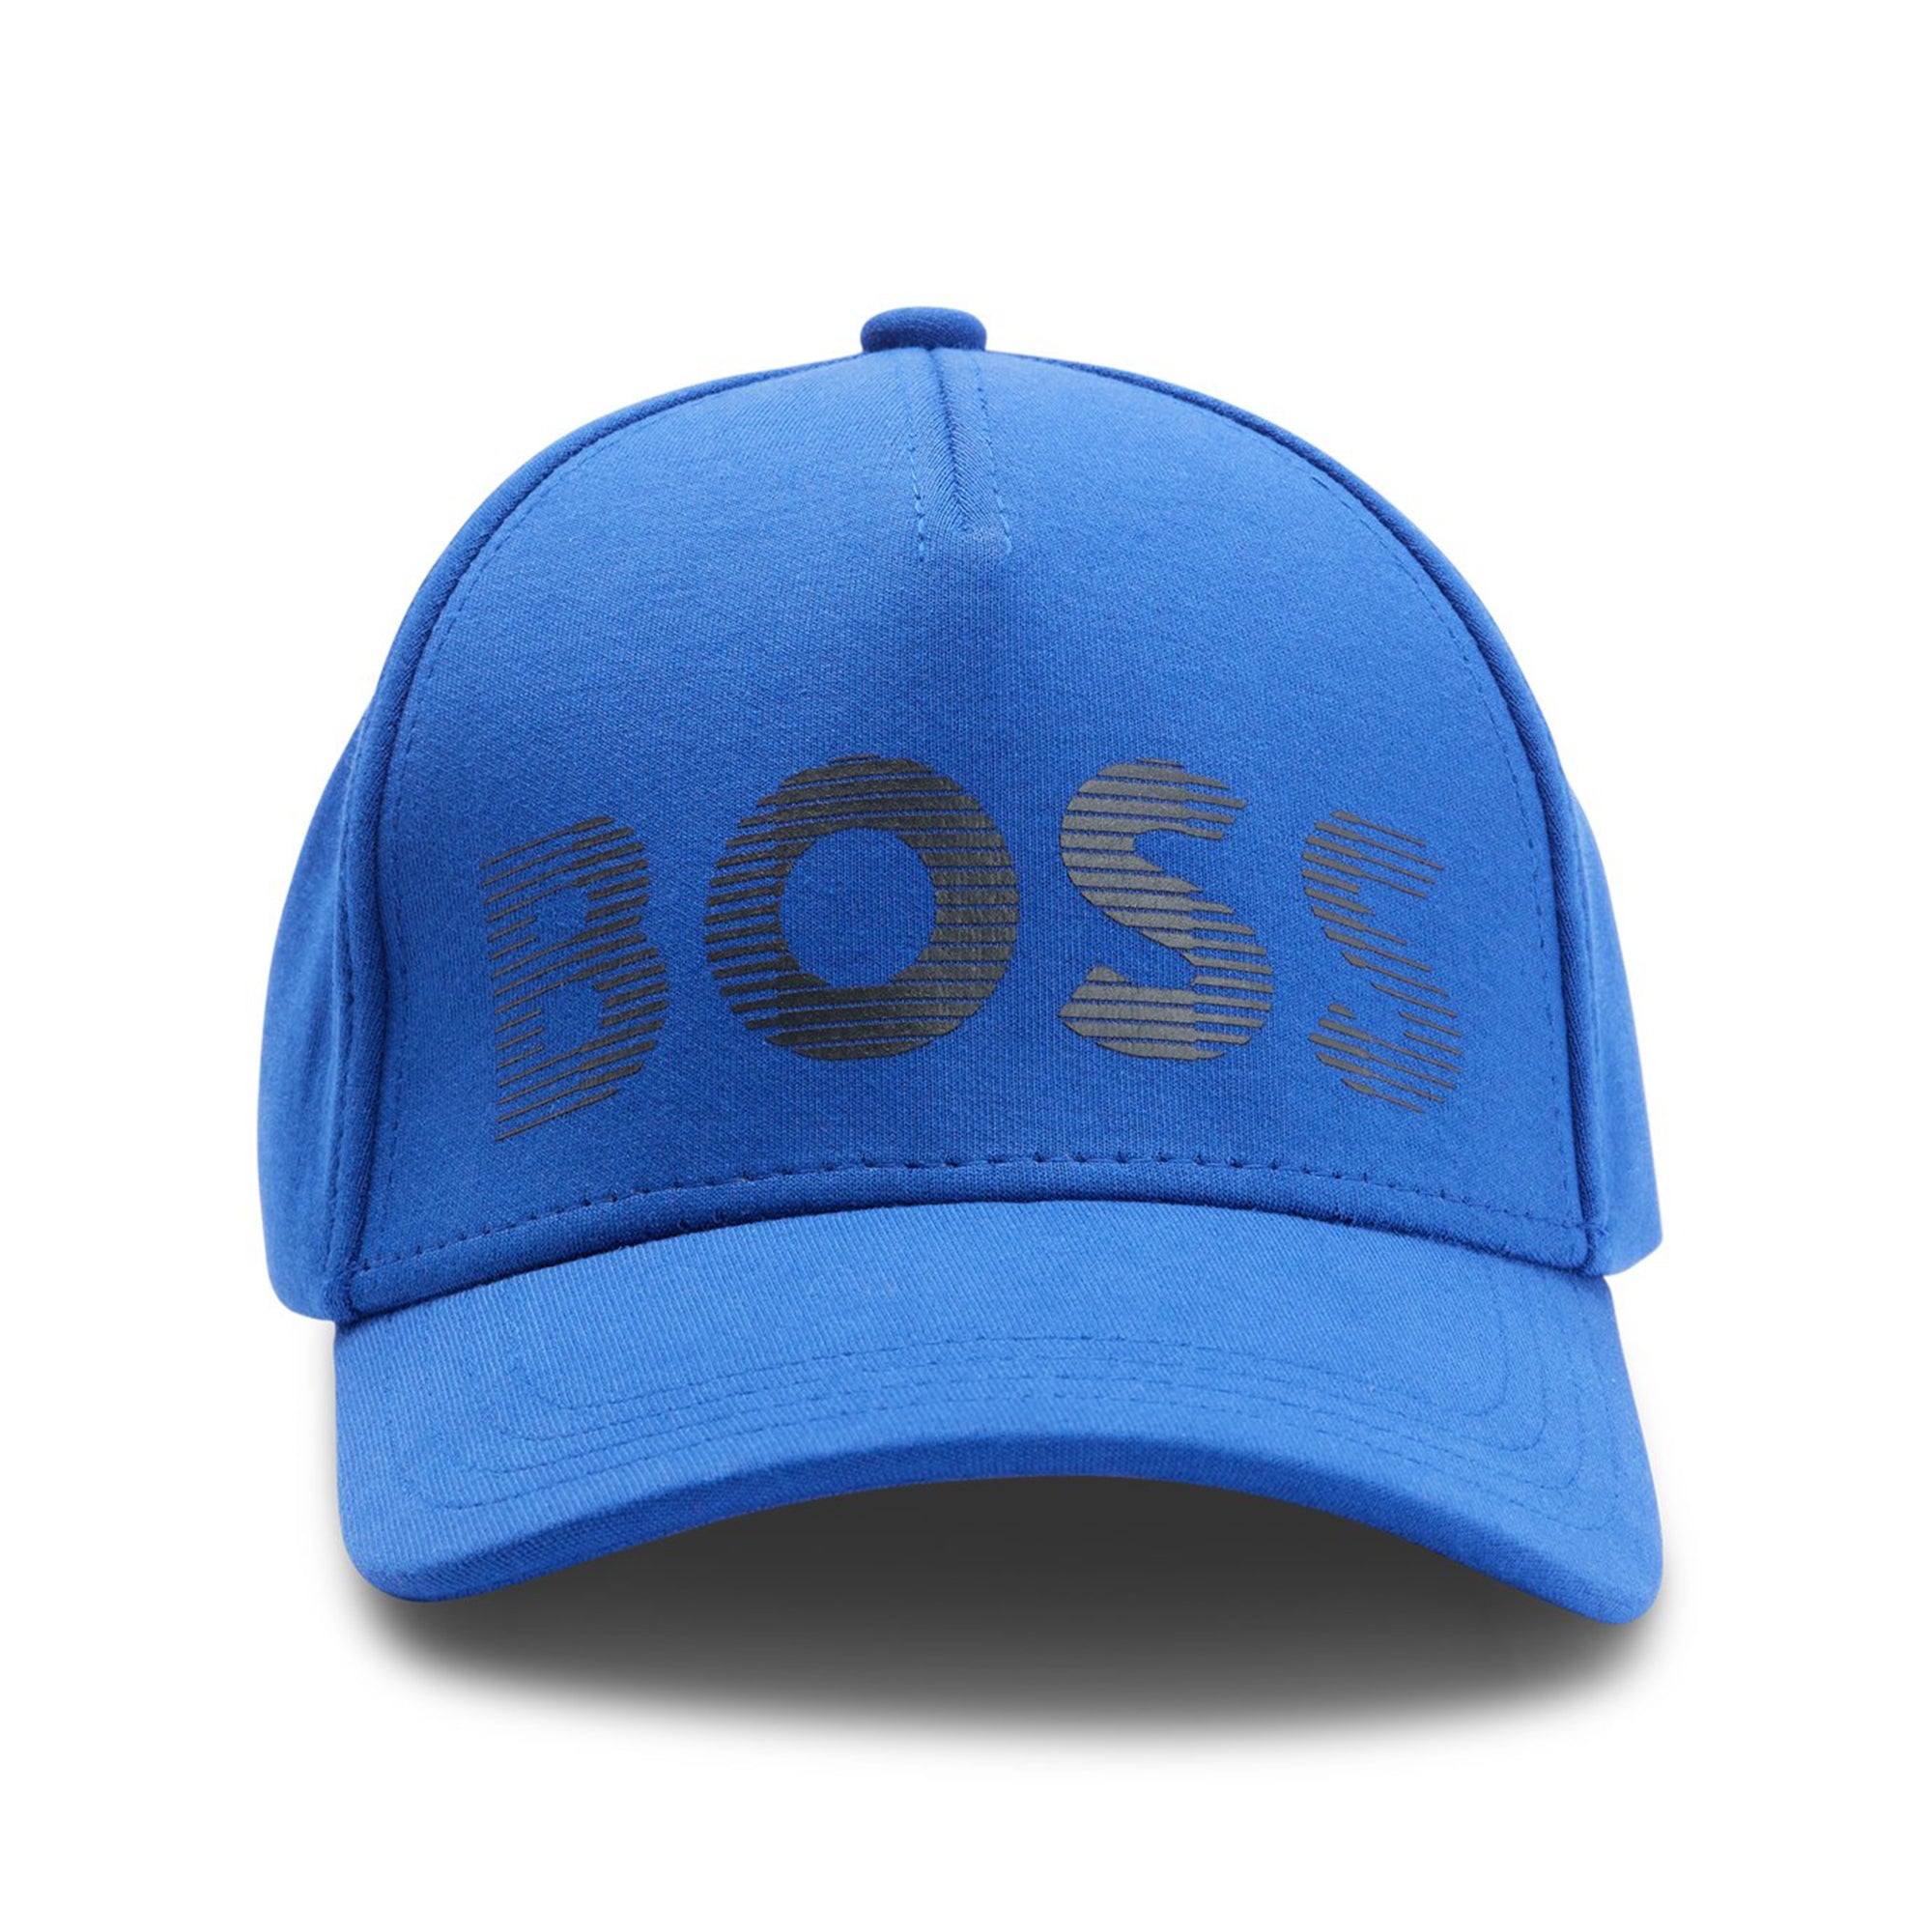 boss-metastripe-cap-50495857-blue-438